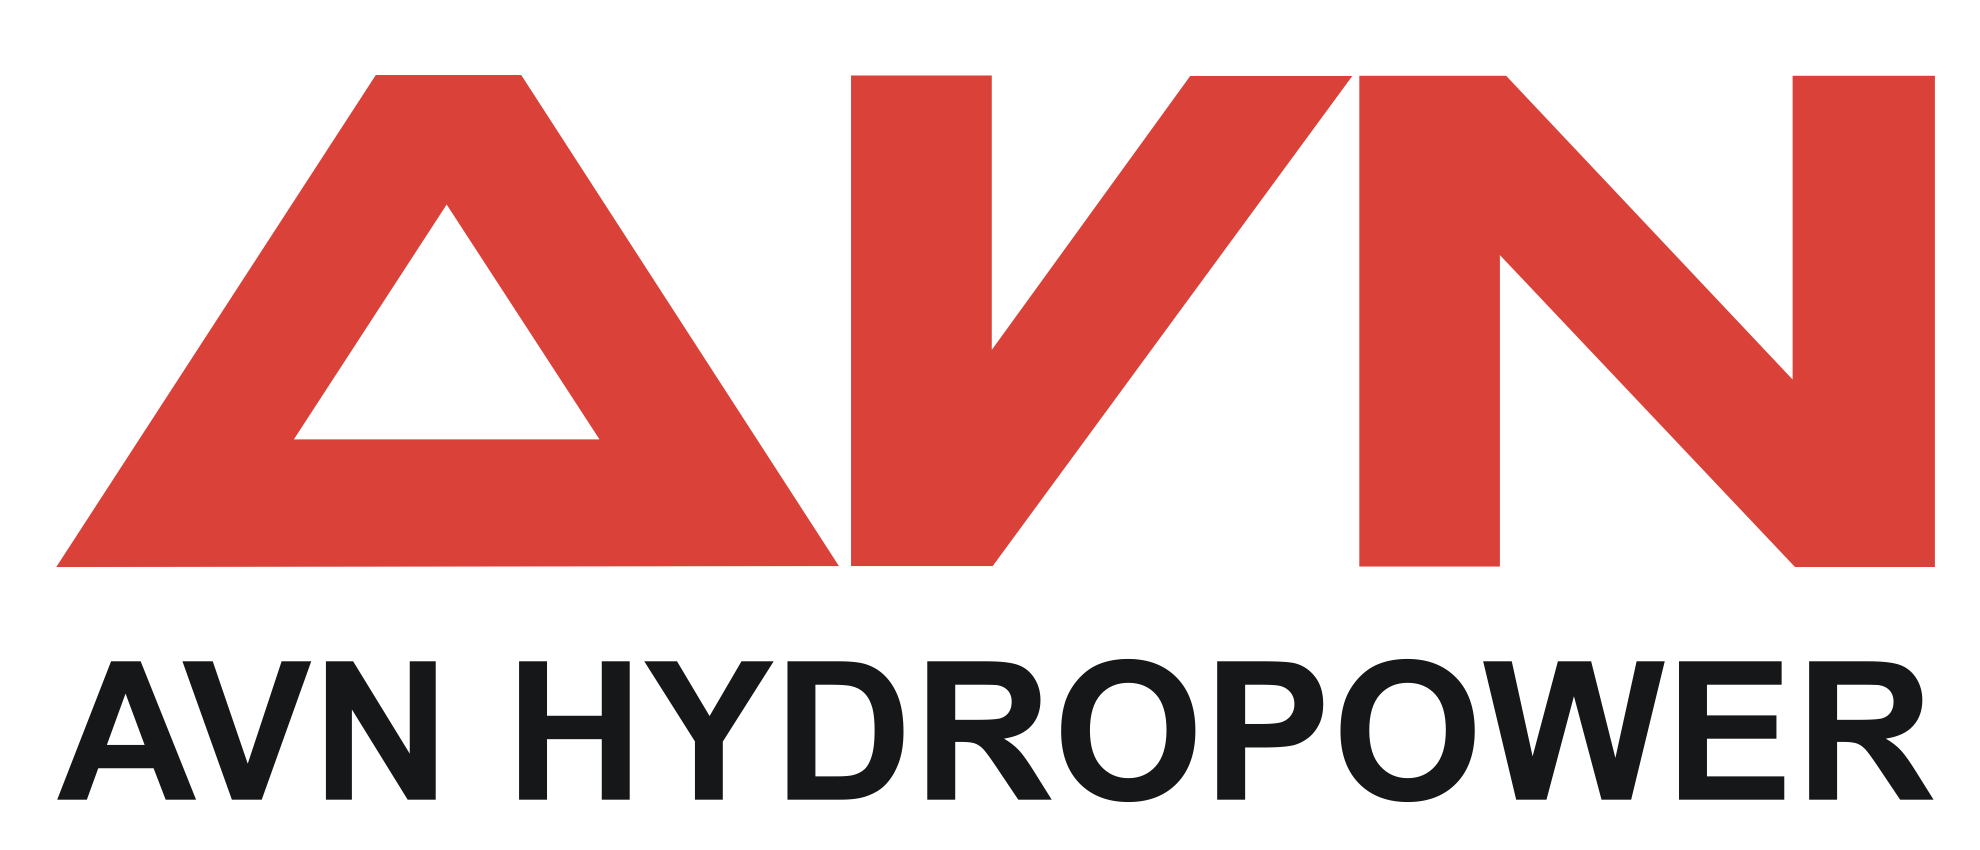 AVN Hydropower.png